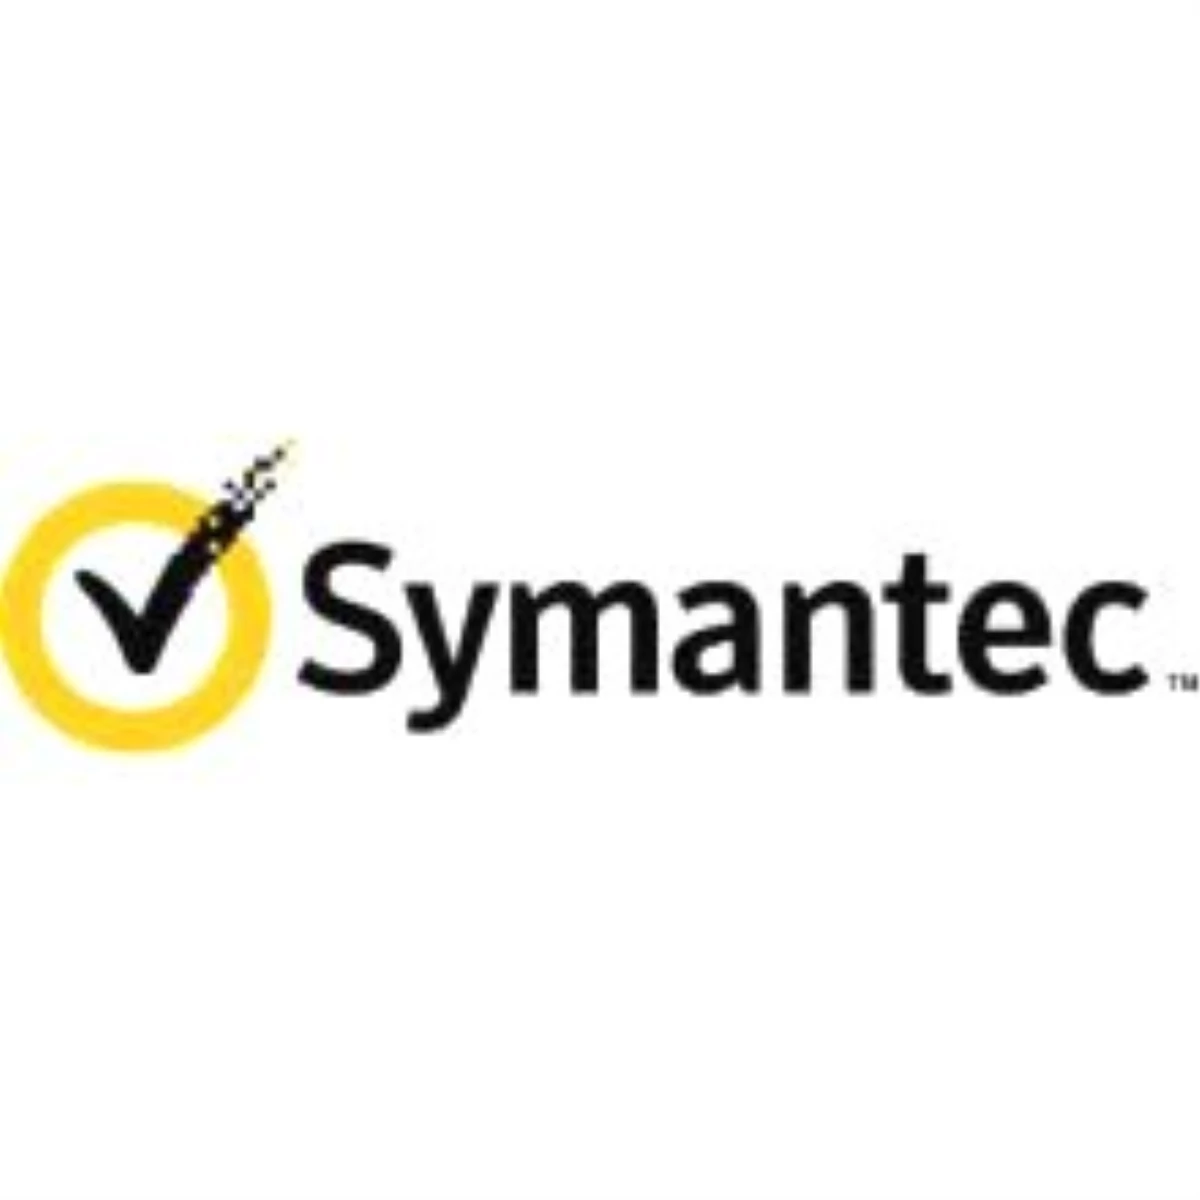 Symantec Kaynak Kodunun Sızdığını Kabul Etti!